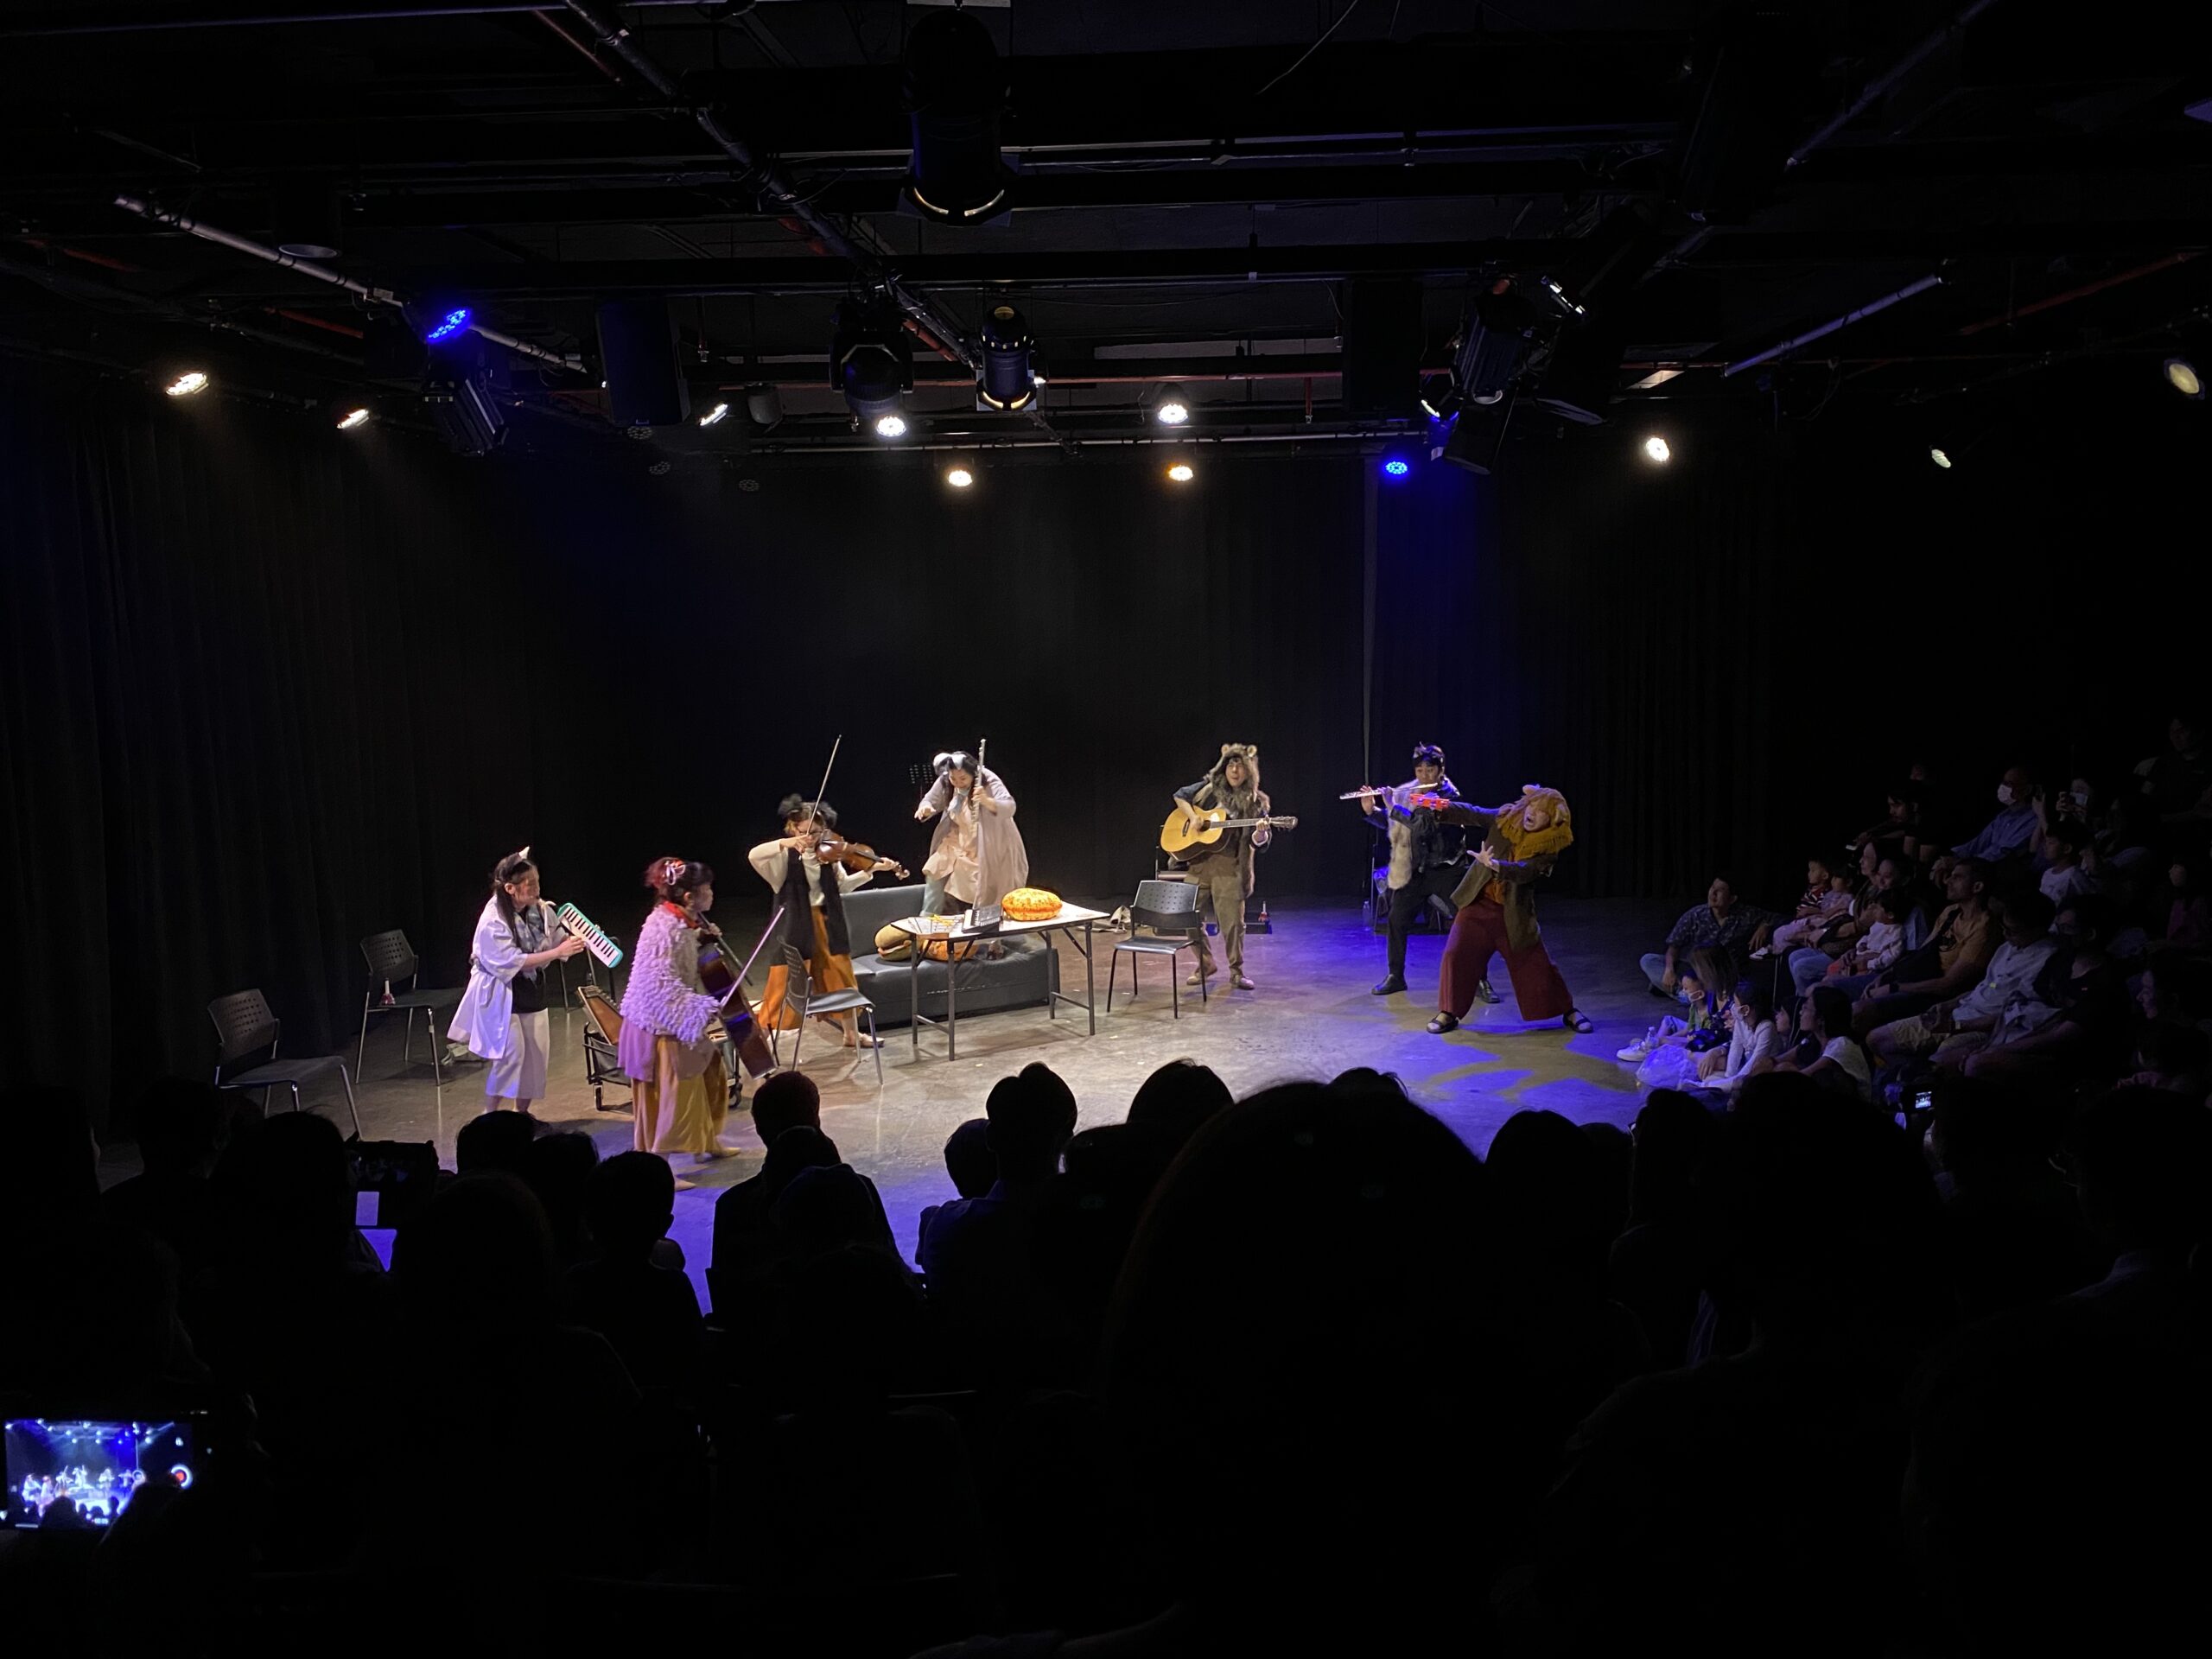 Performance Reviews: Bremen, Bremen: the musical